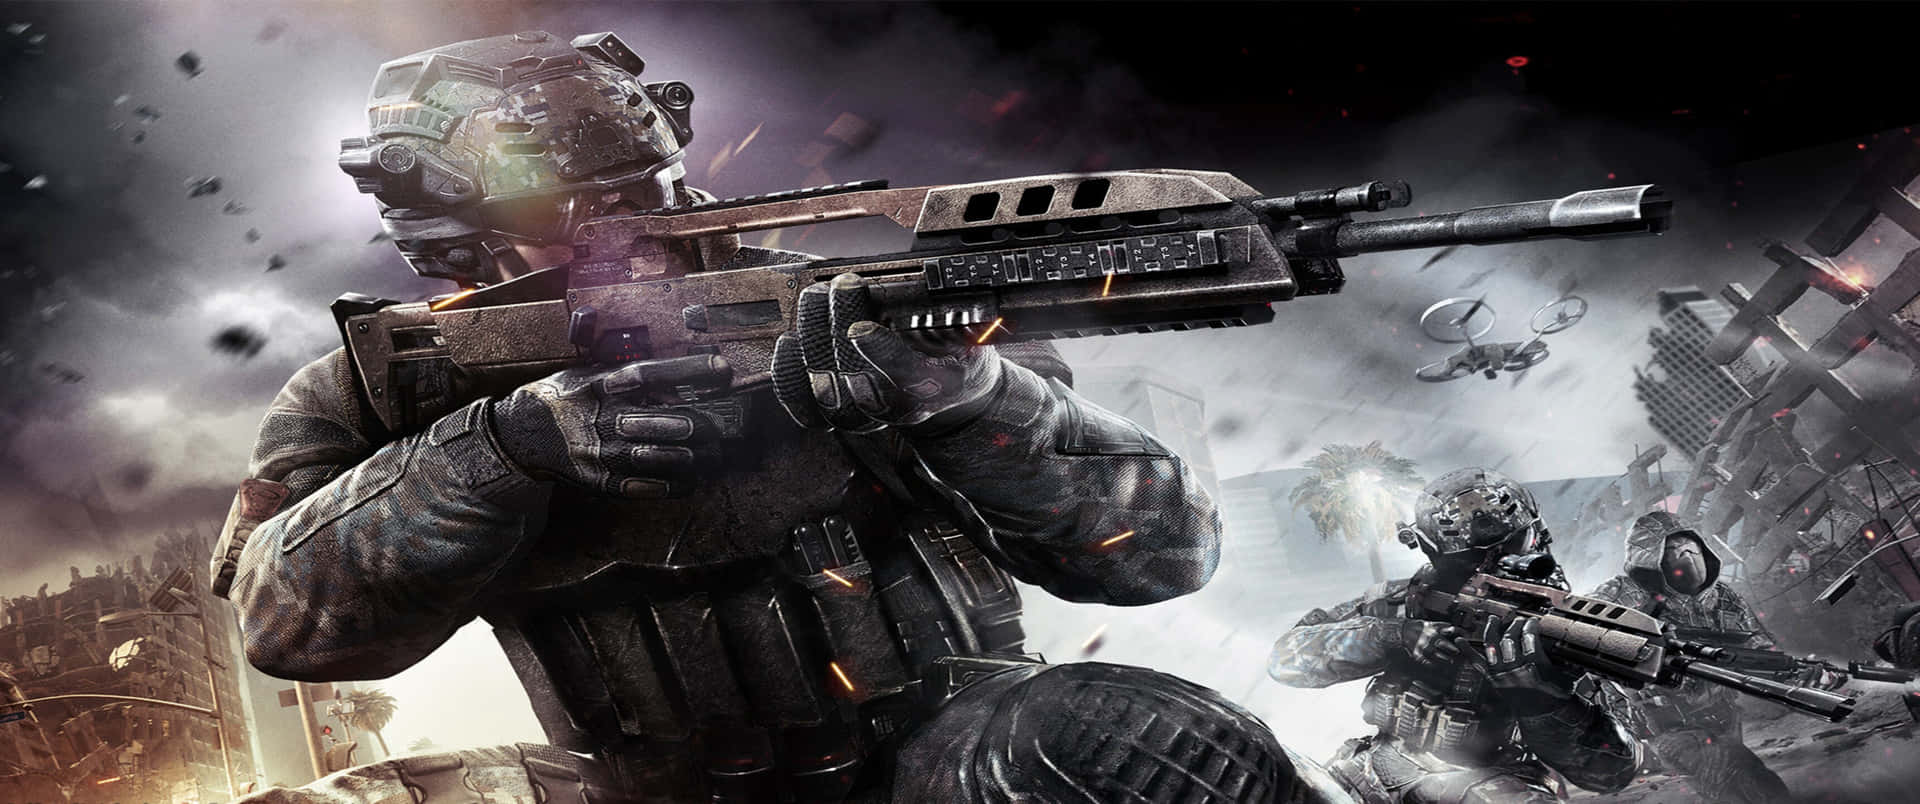 Fondode Pantalla De Call Of Duty Modern Warfare En Primer Plano De Soldado 3440x1440p